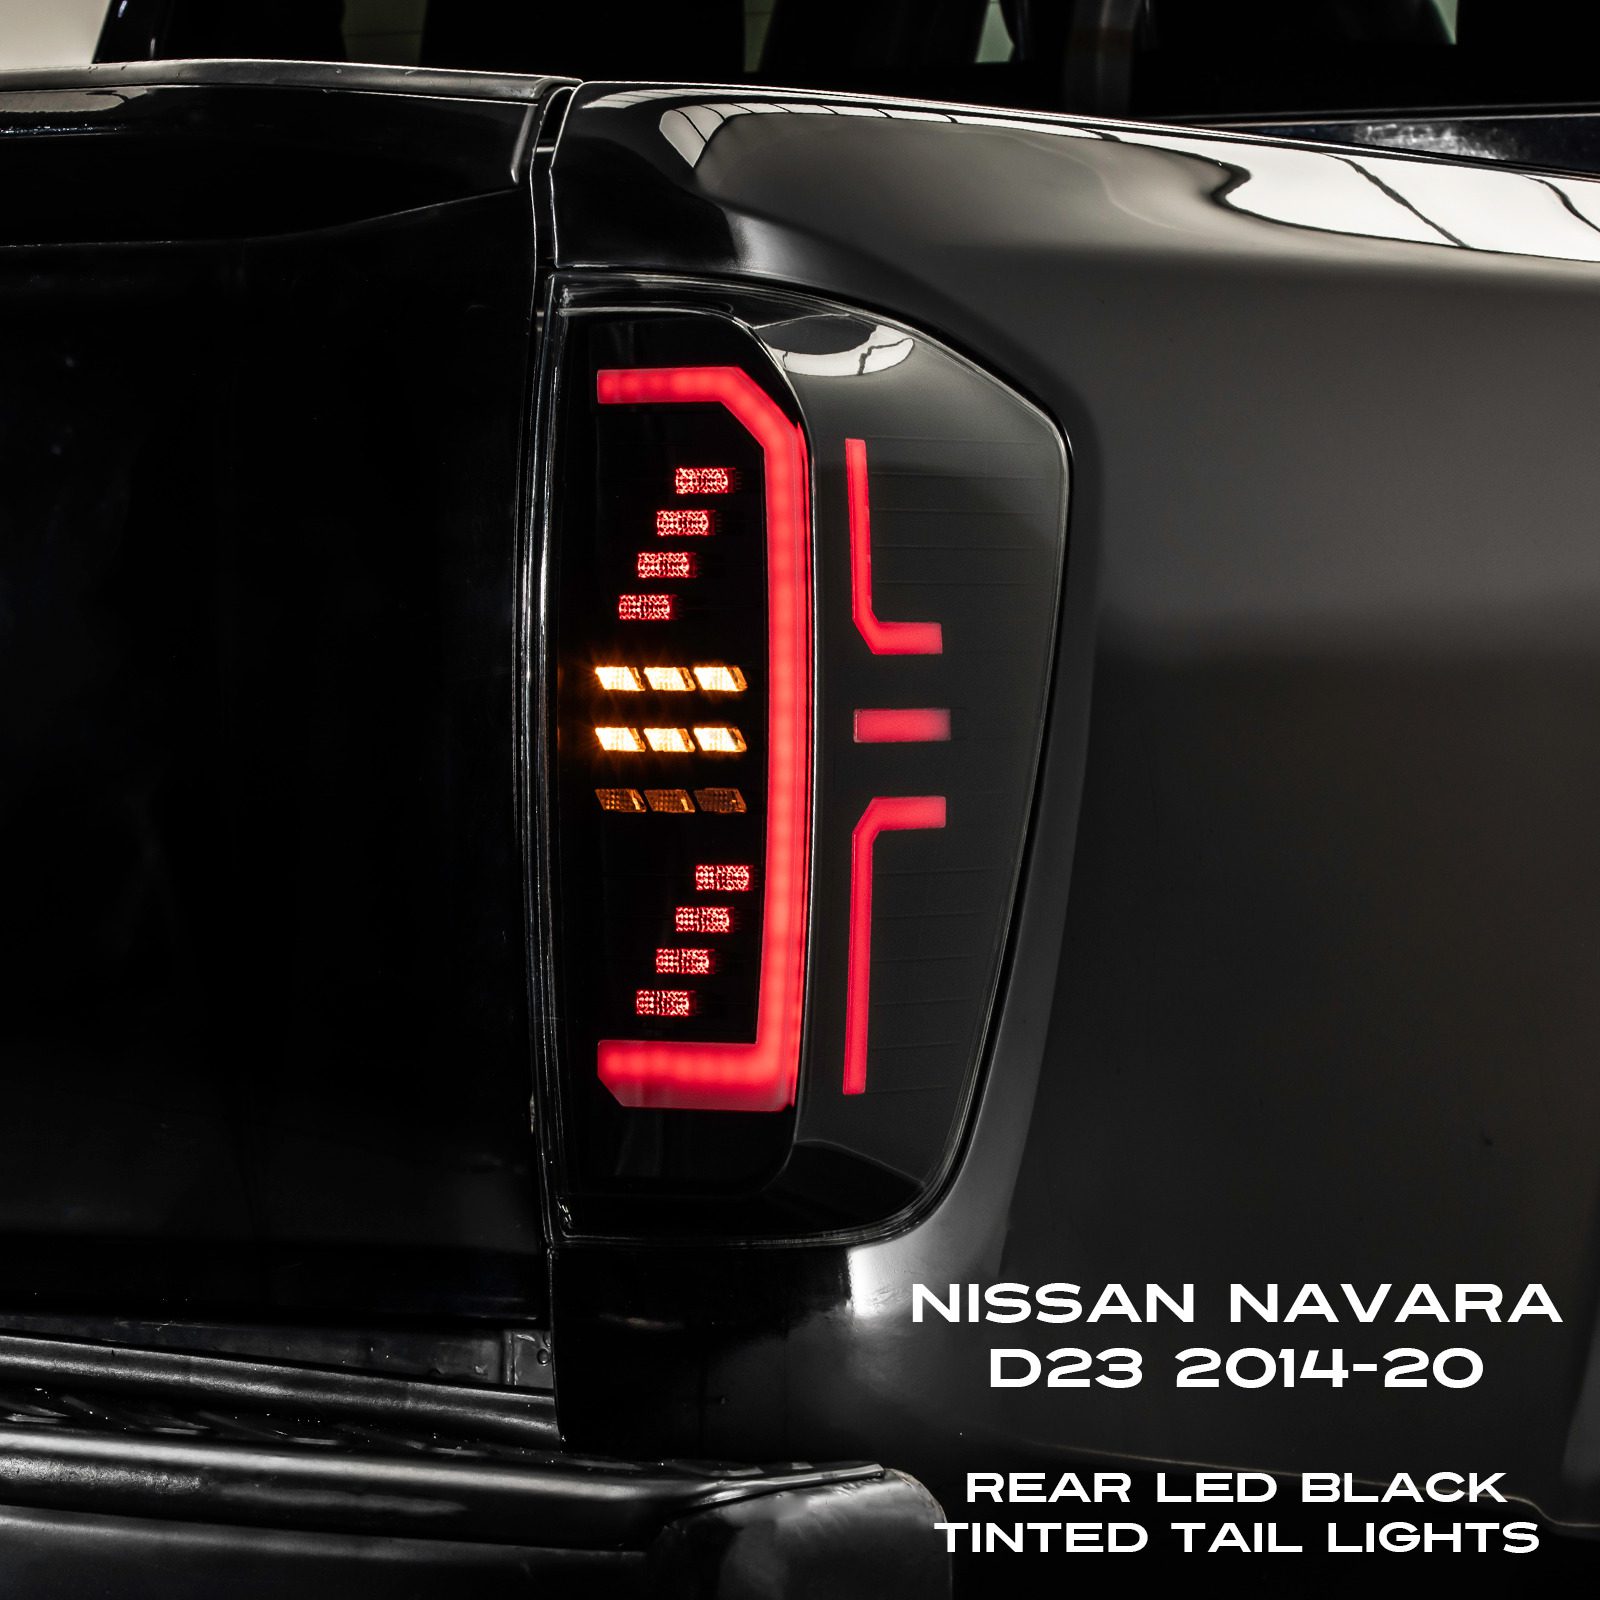 Nissan Navara Tinted Tail Lights